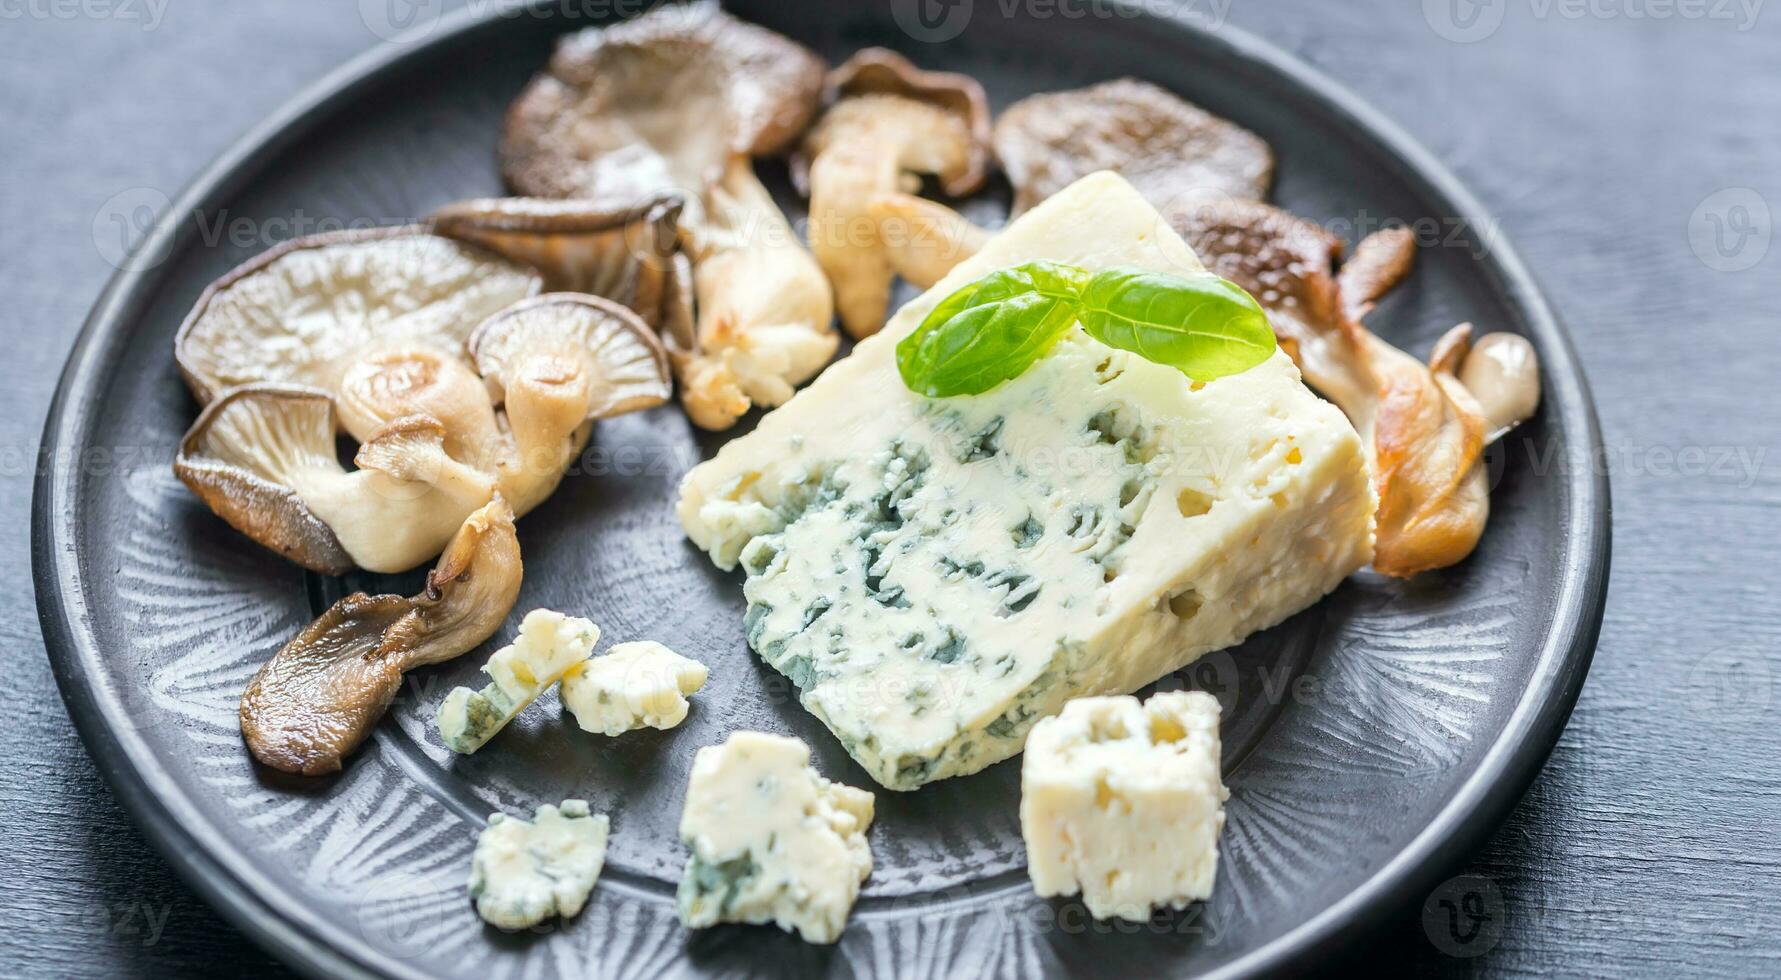 azul queijo com nozes e ostra cogumelos foto